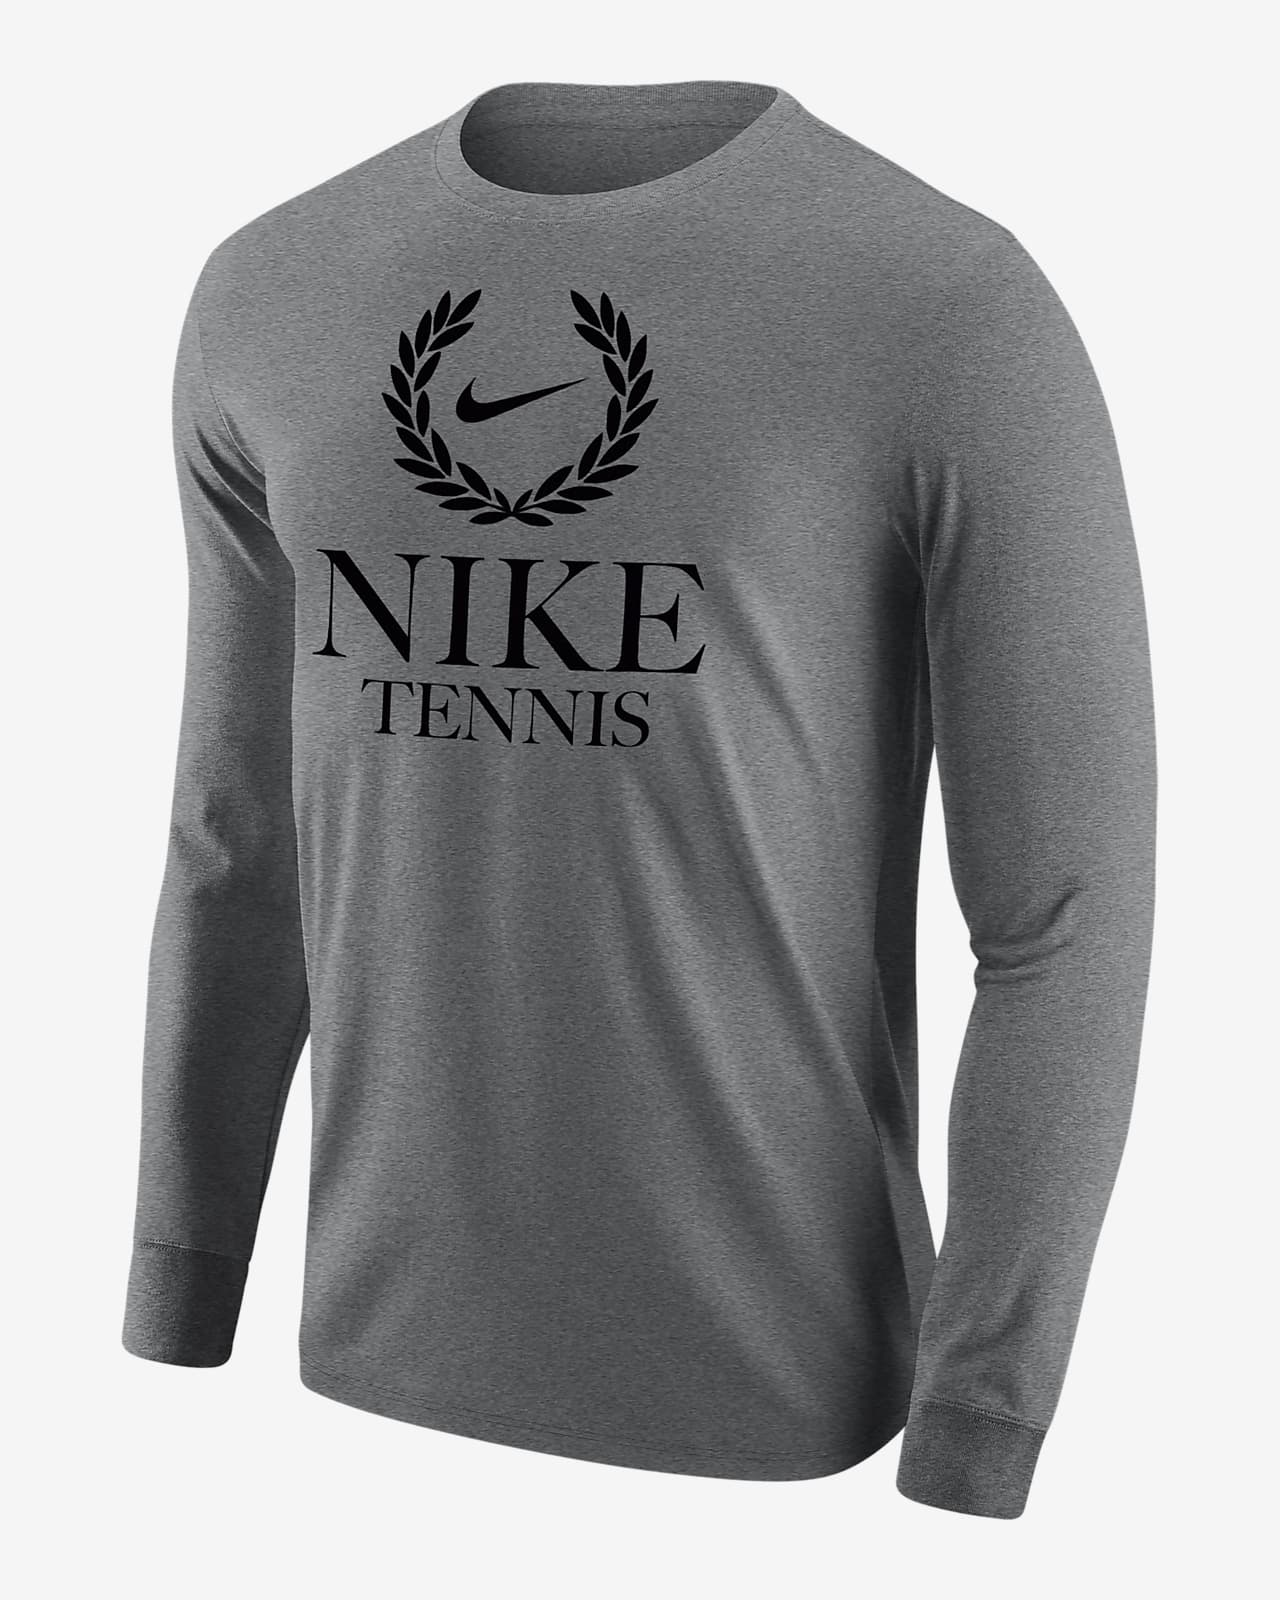 Playera para hombre Nike Tennis